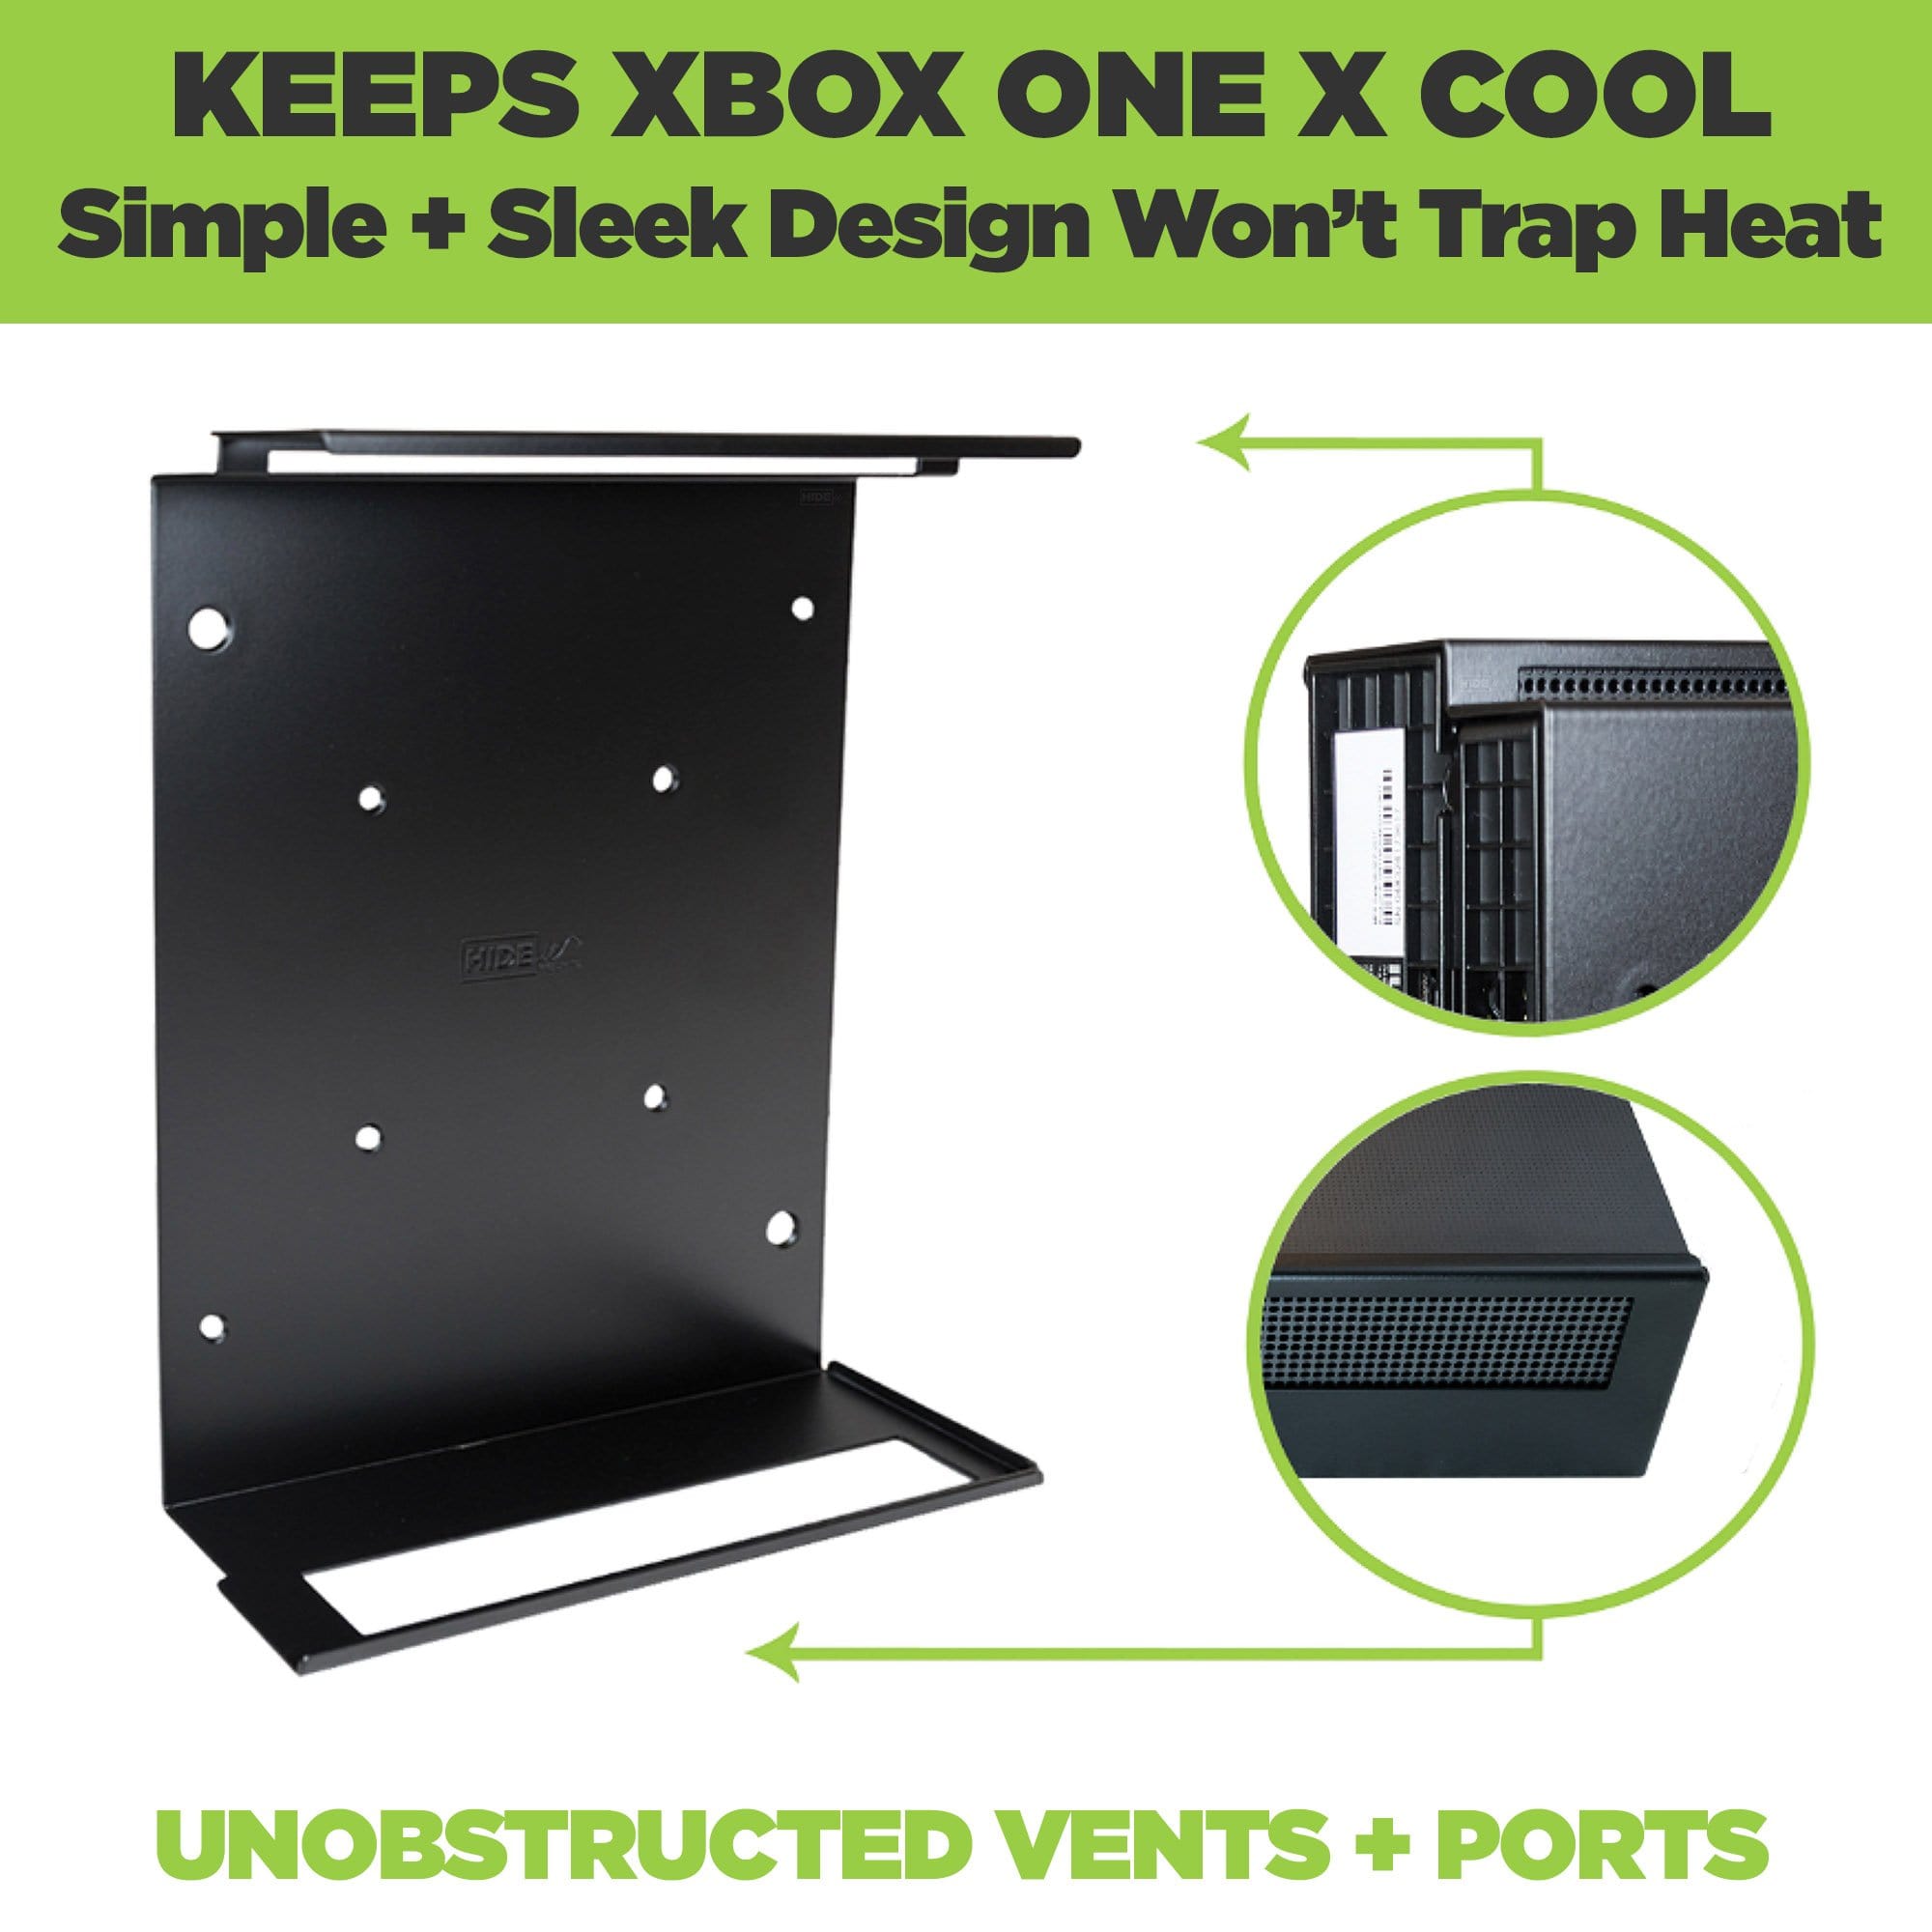 HIDEit wall hanging mount, under-desk mount, and VESA mount keeps X1X cool with proper ventilation.